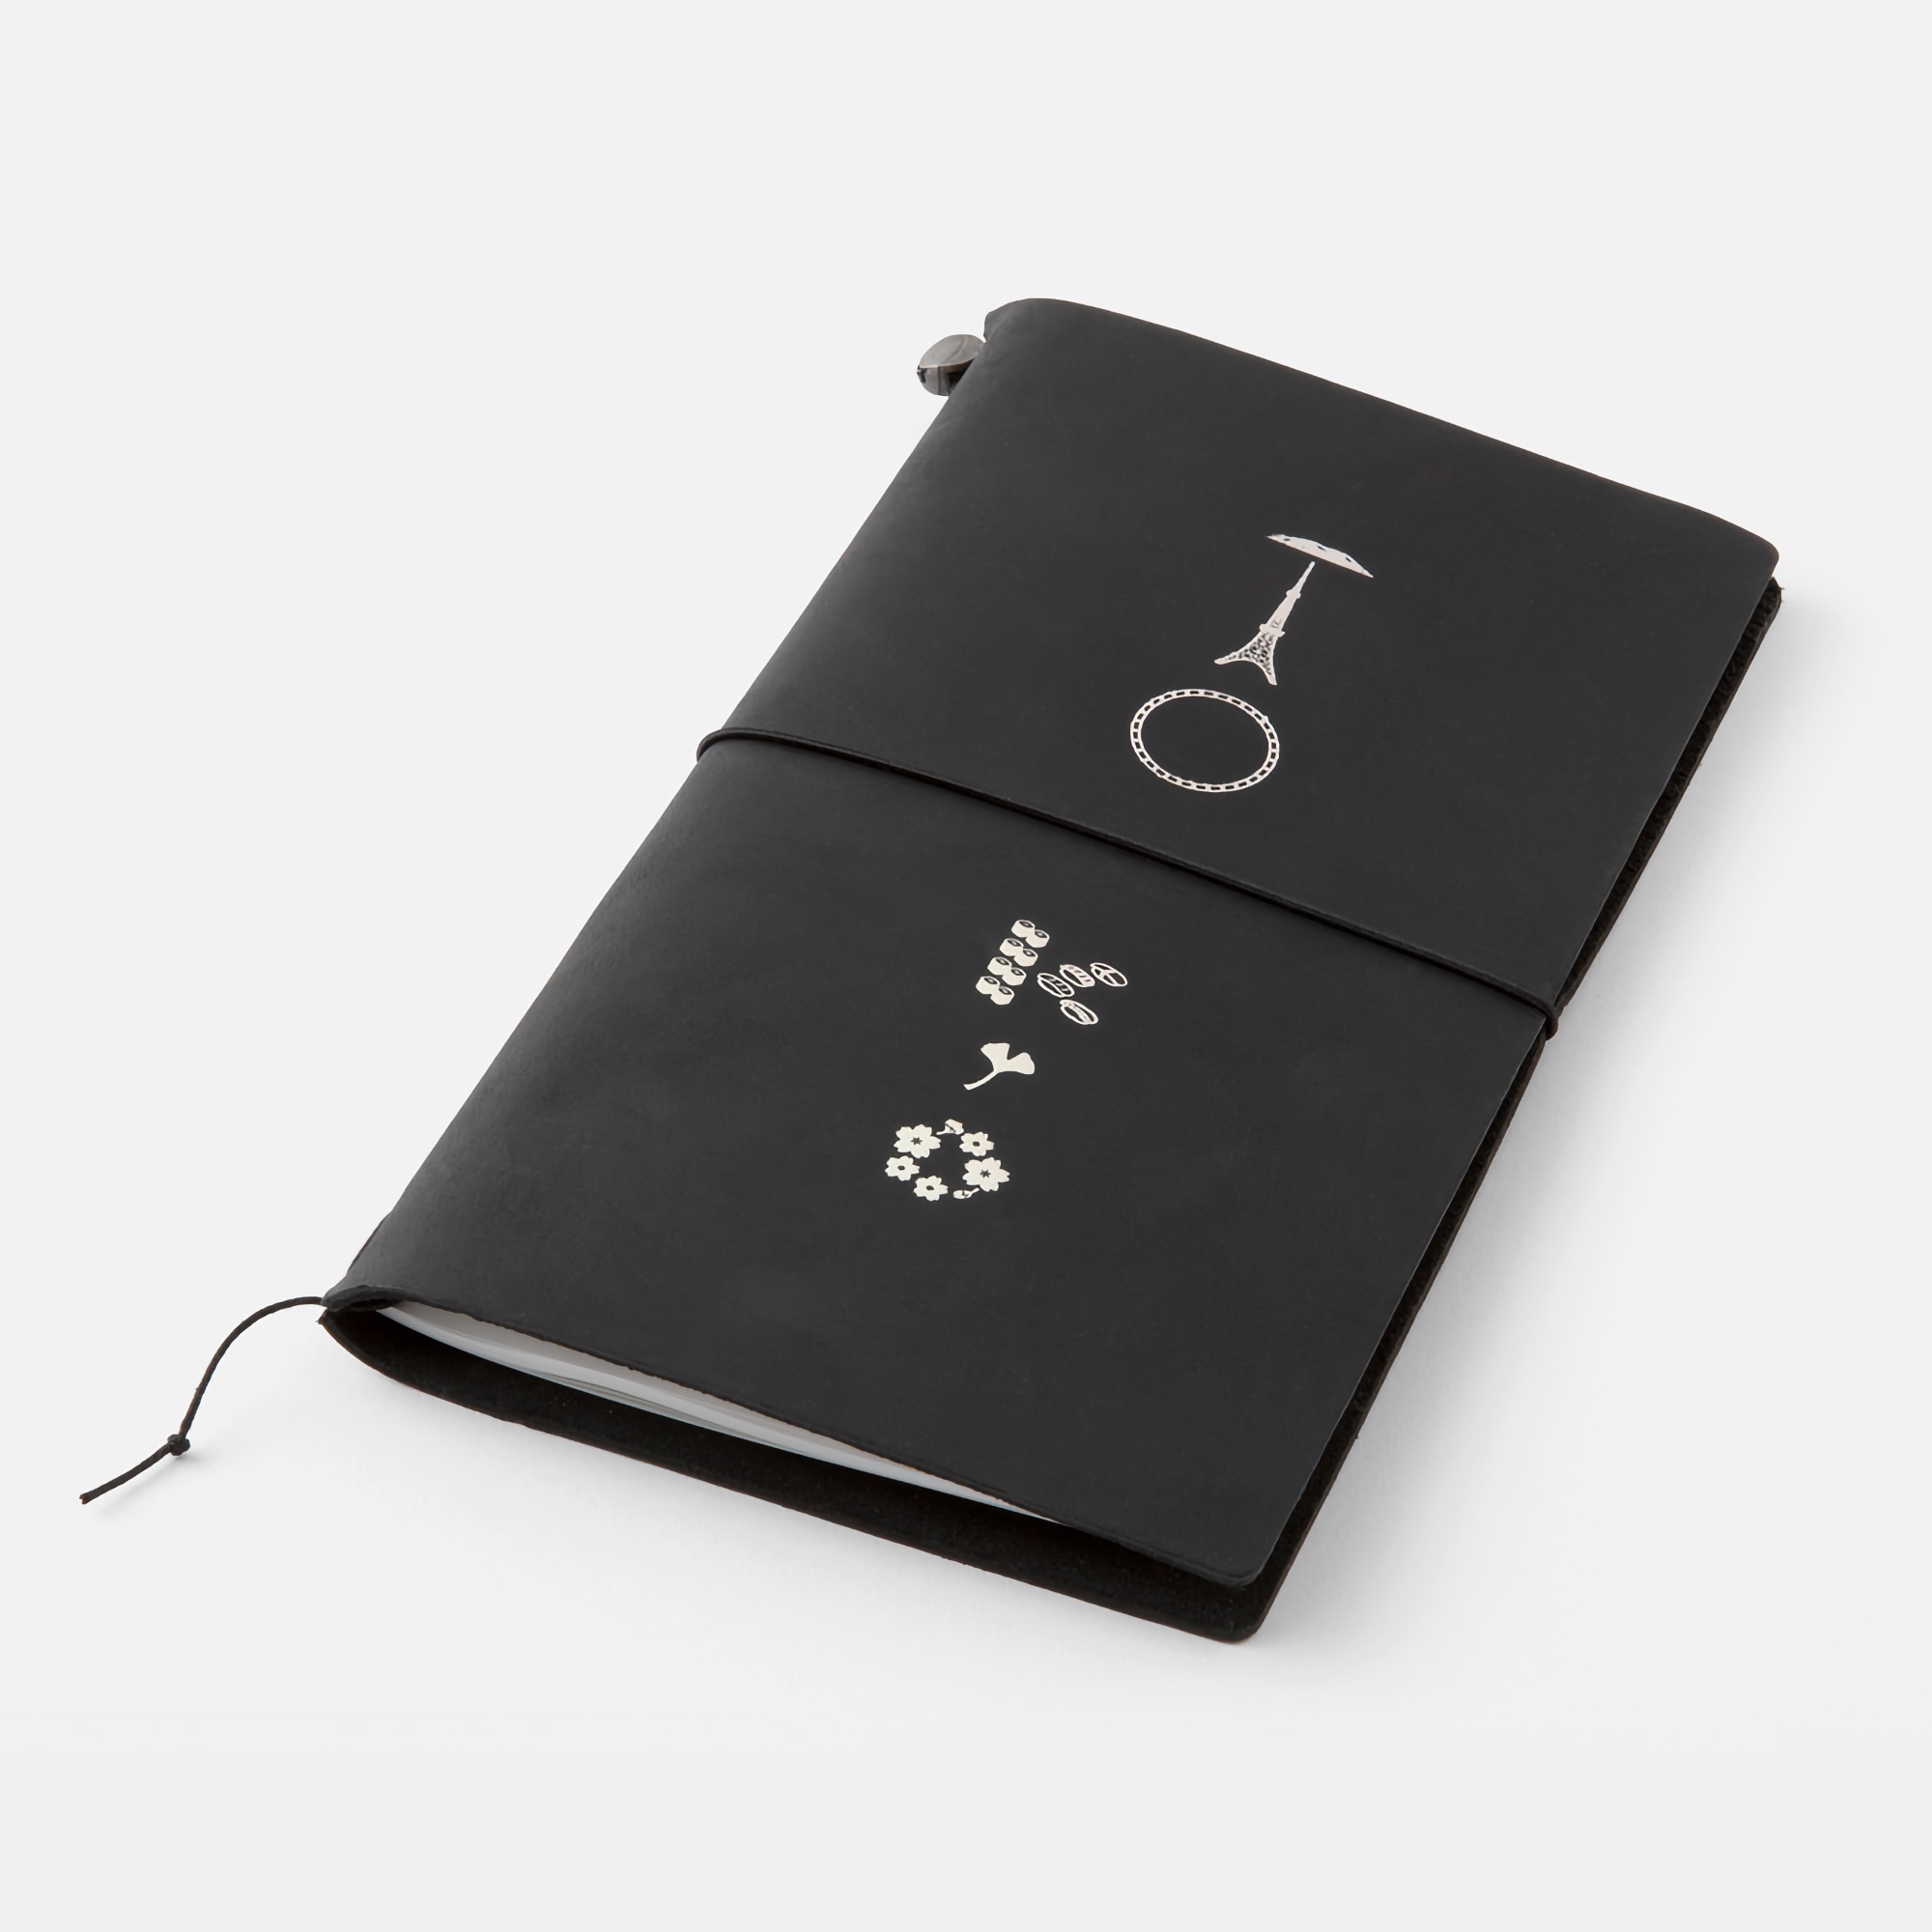 Traveler’s Company Traveler's Notebook – Tokyo Edition LIMITED, Regular Size (Starter Kit)